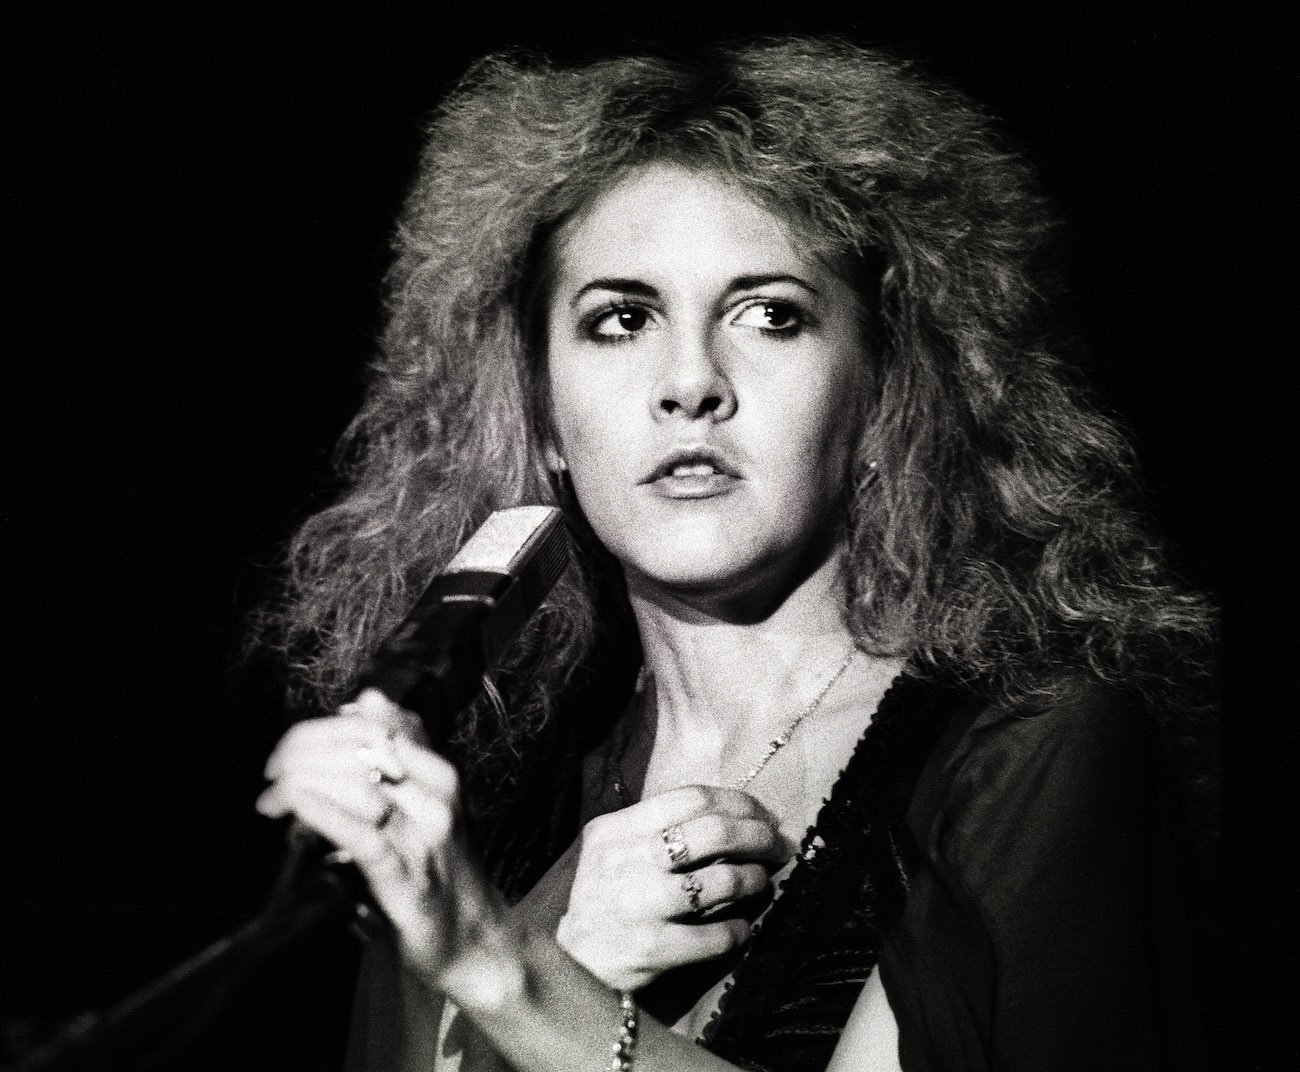 Stevie Nicks performing in black in the Netherlands in 1980.